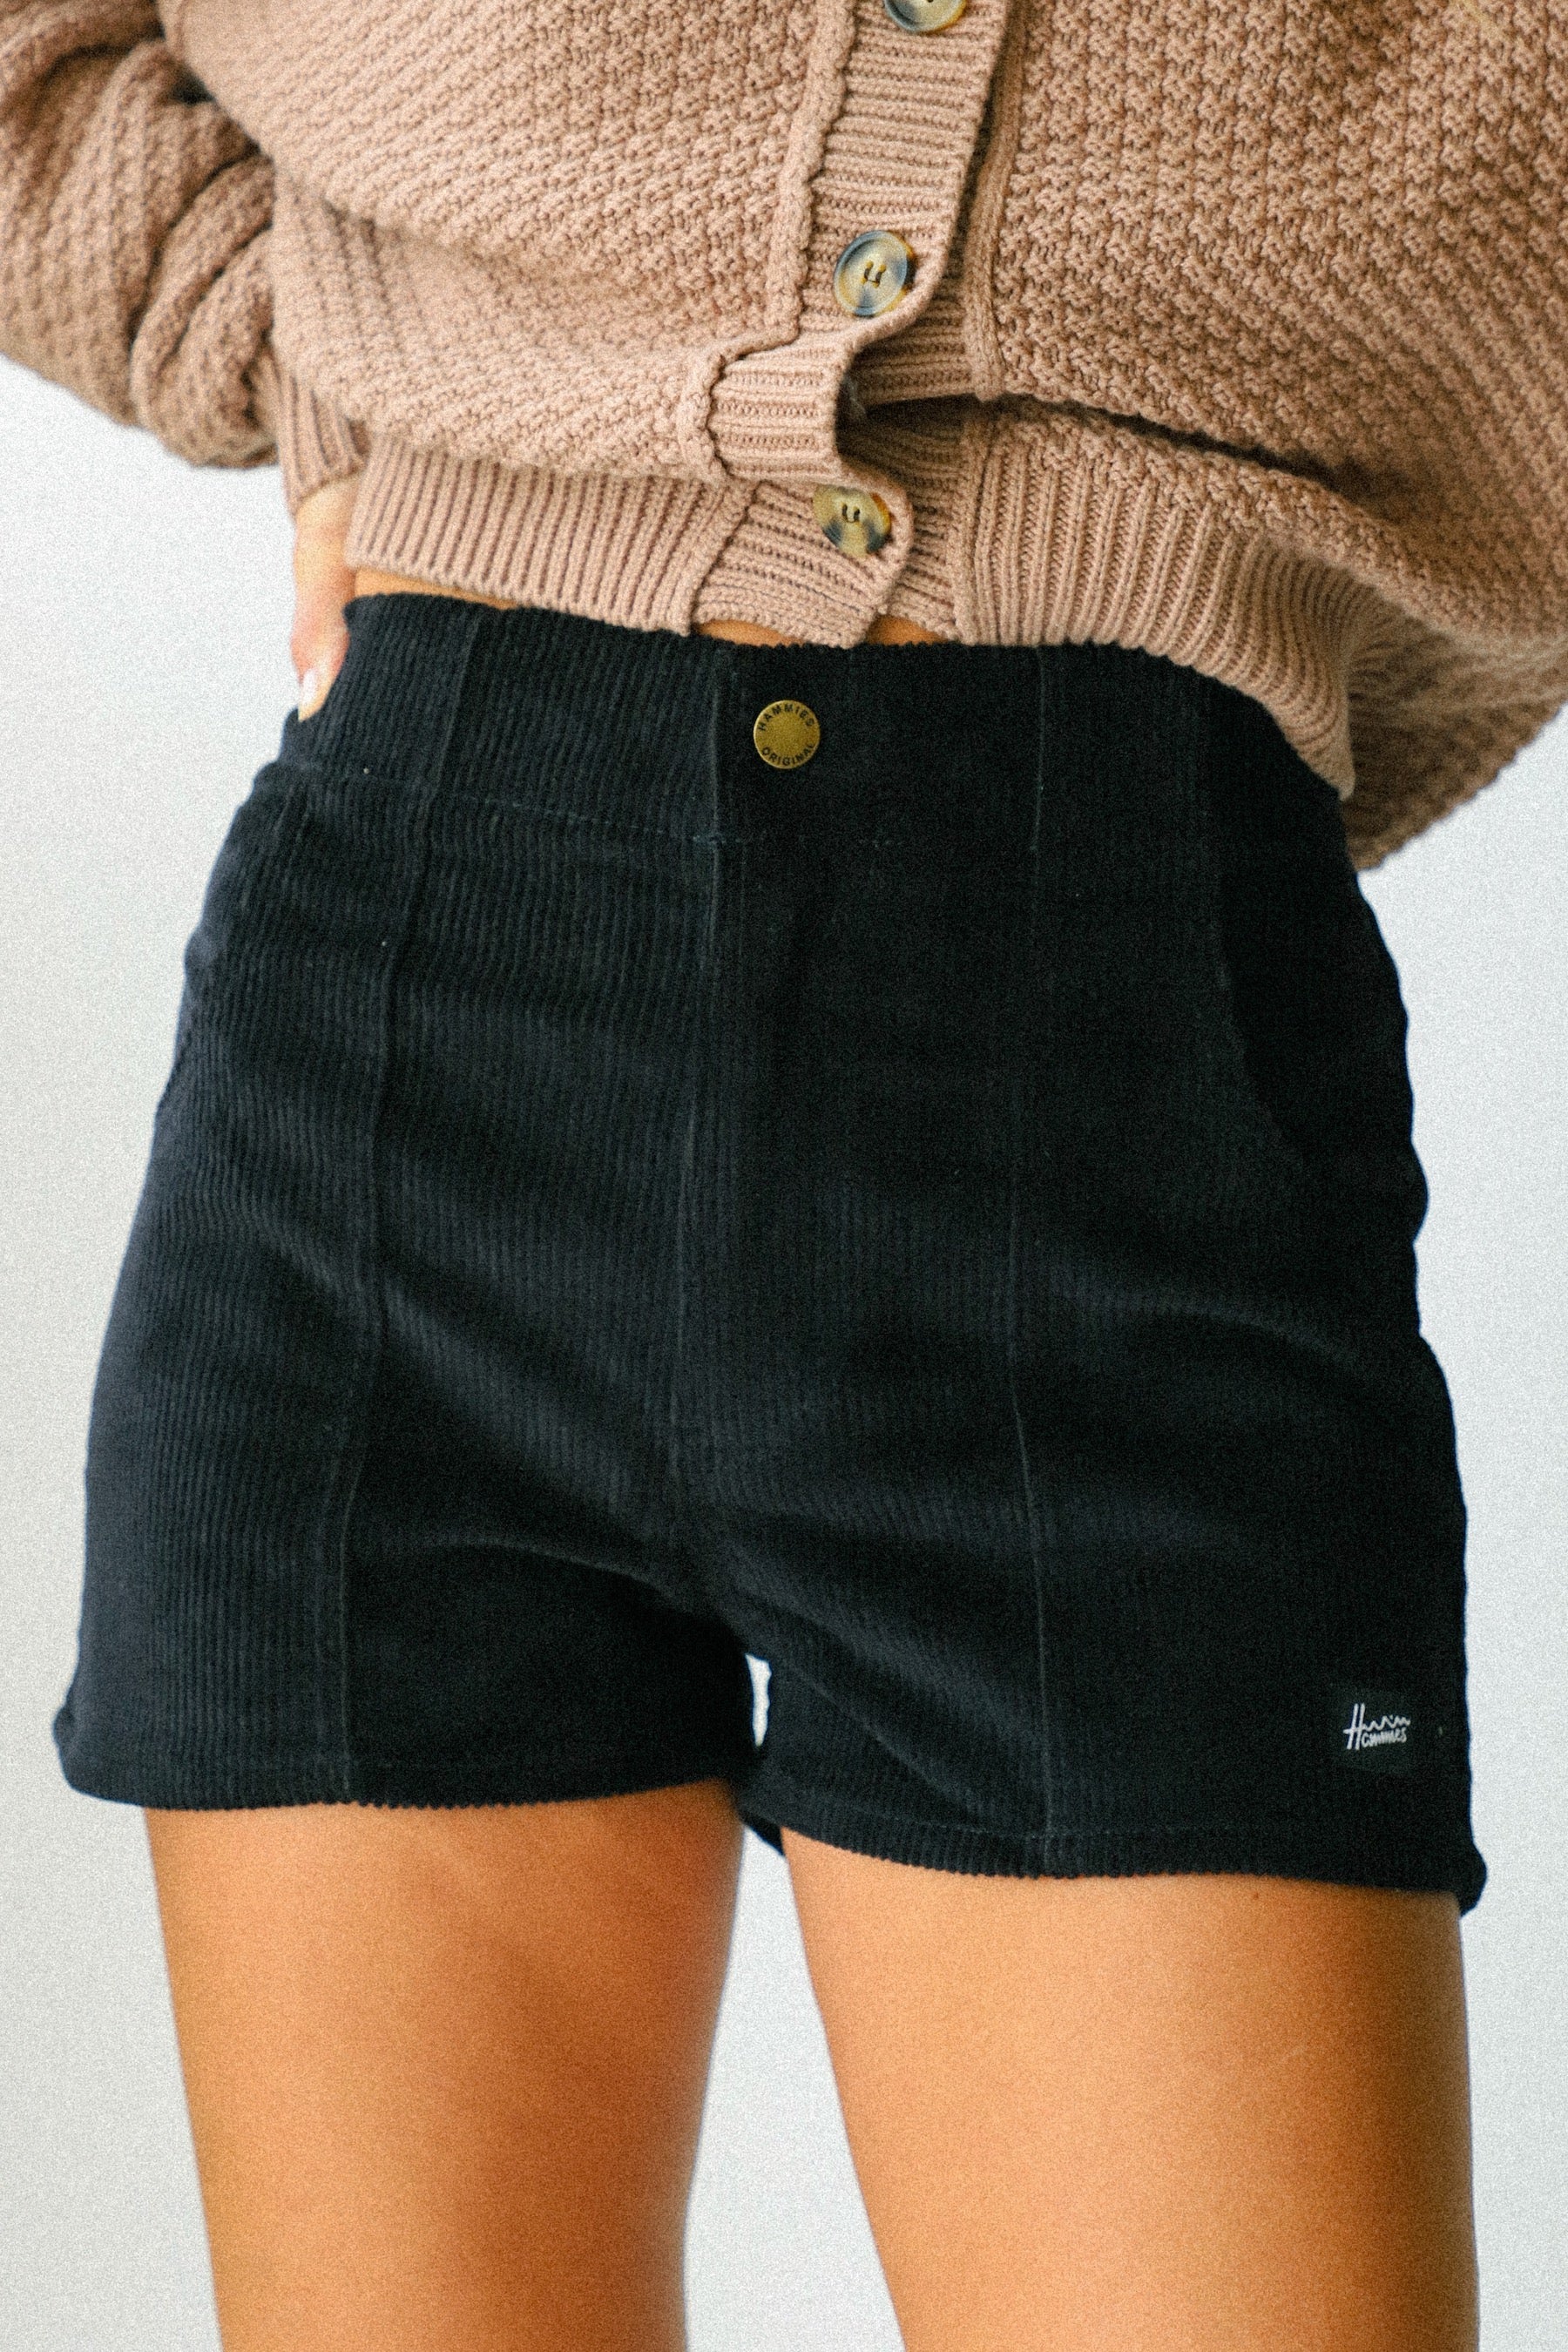 Hammies Shorts - Black